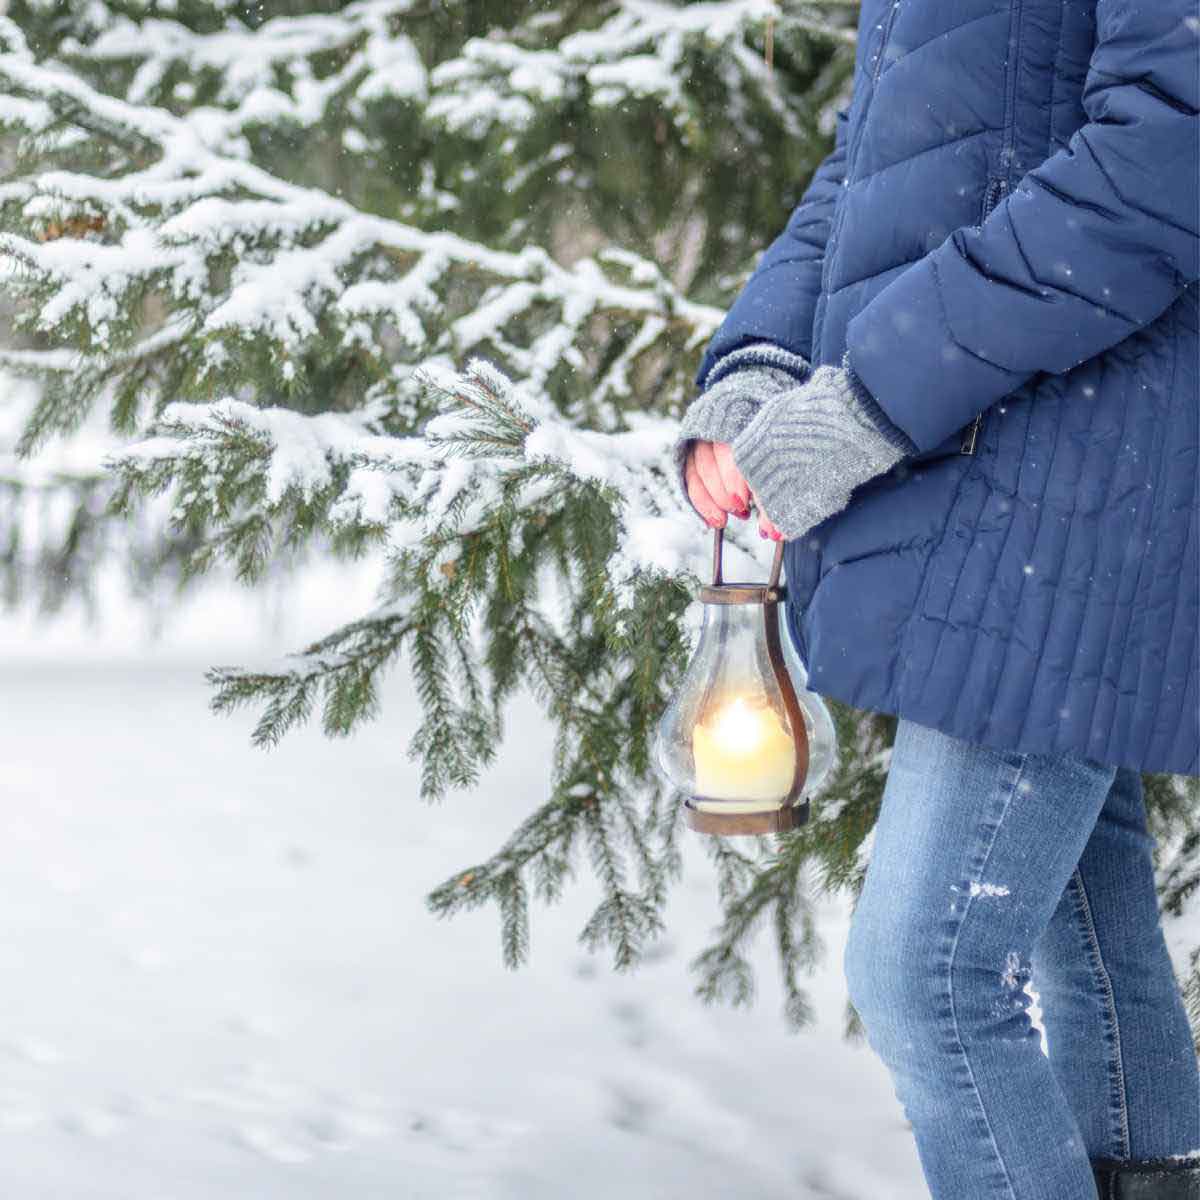 A woman in a blue winter coat carrying a lantern near snowy pine boughs.